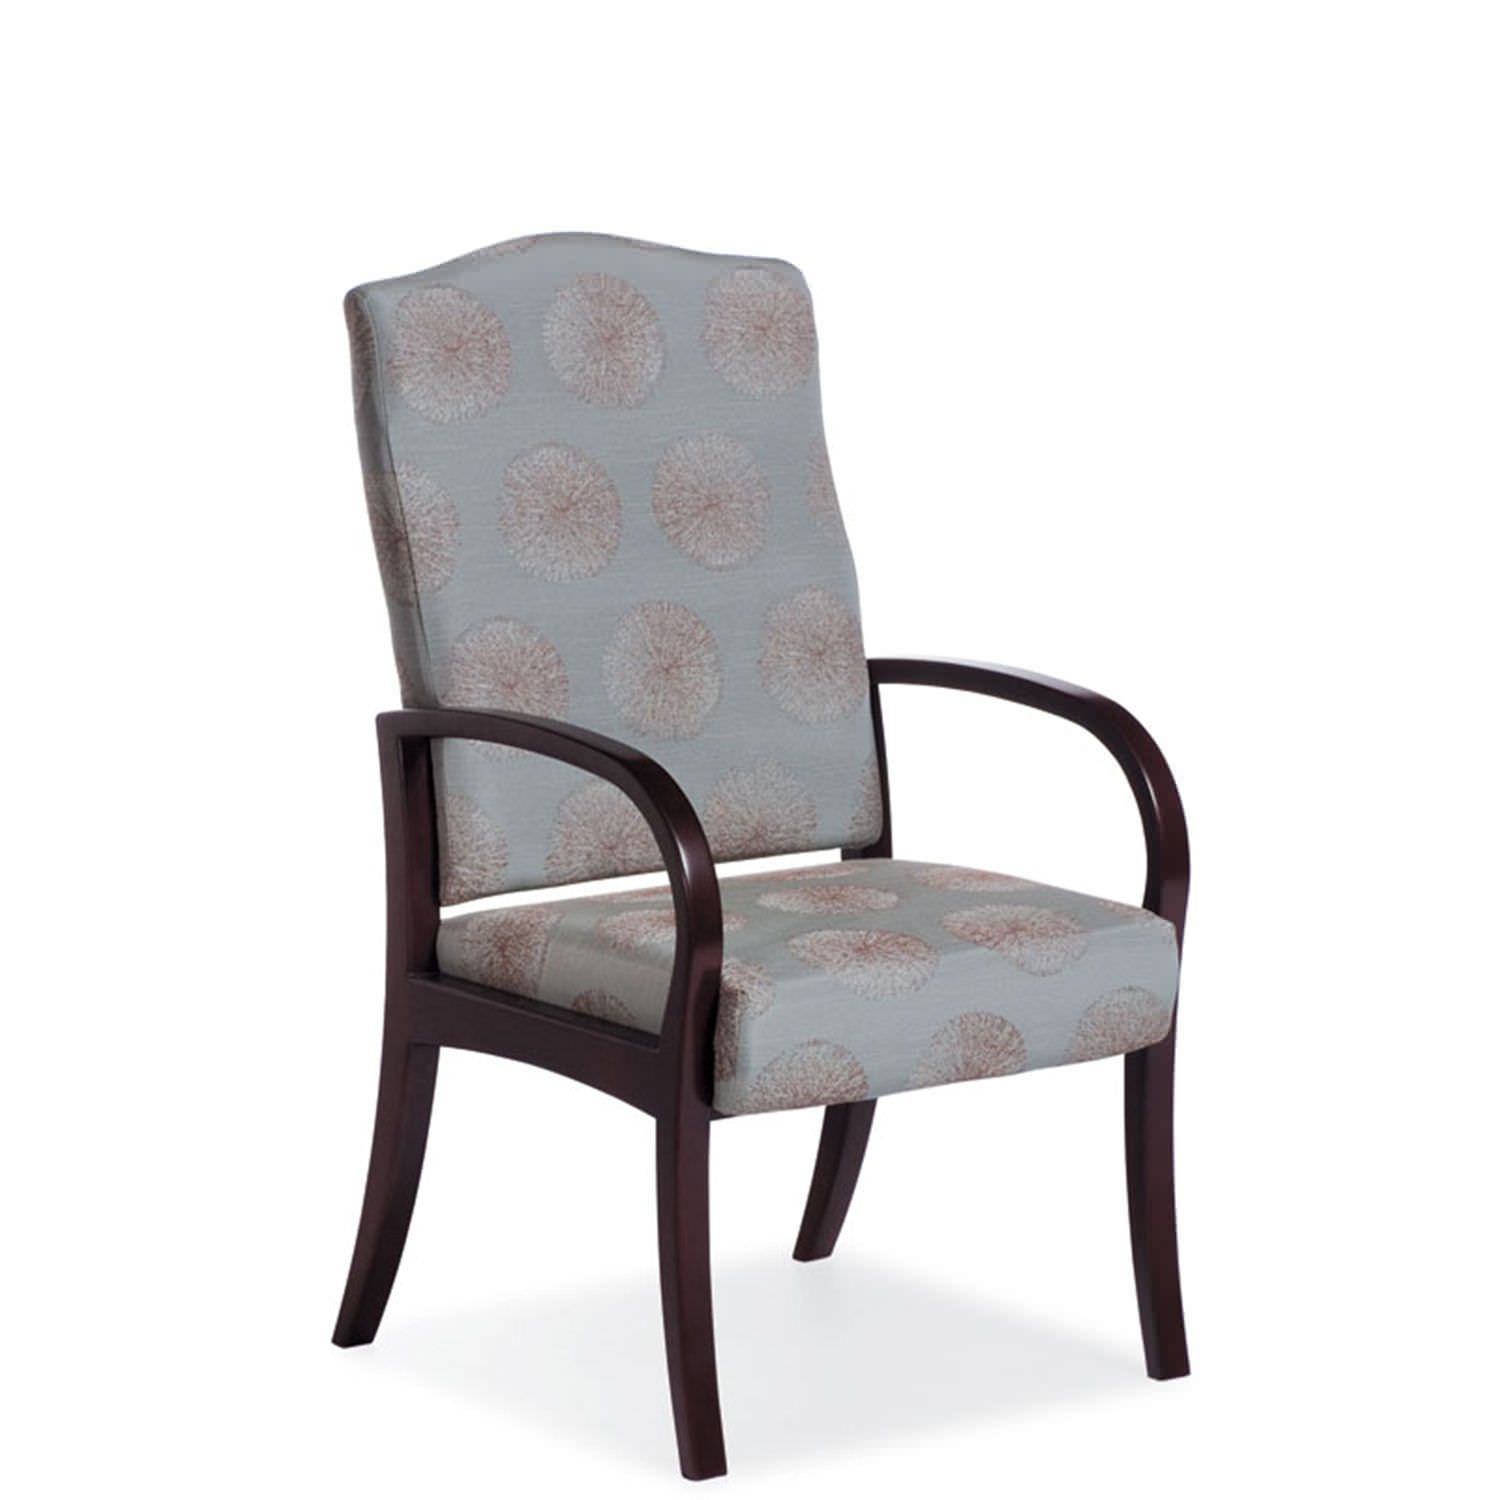 Office chair / with high backrest / with armrests Dixon DX10H, Dixon DX10M La-Z-Boy Contract Furniture